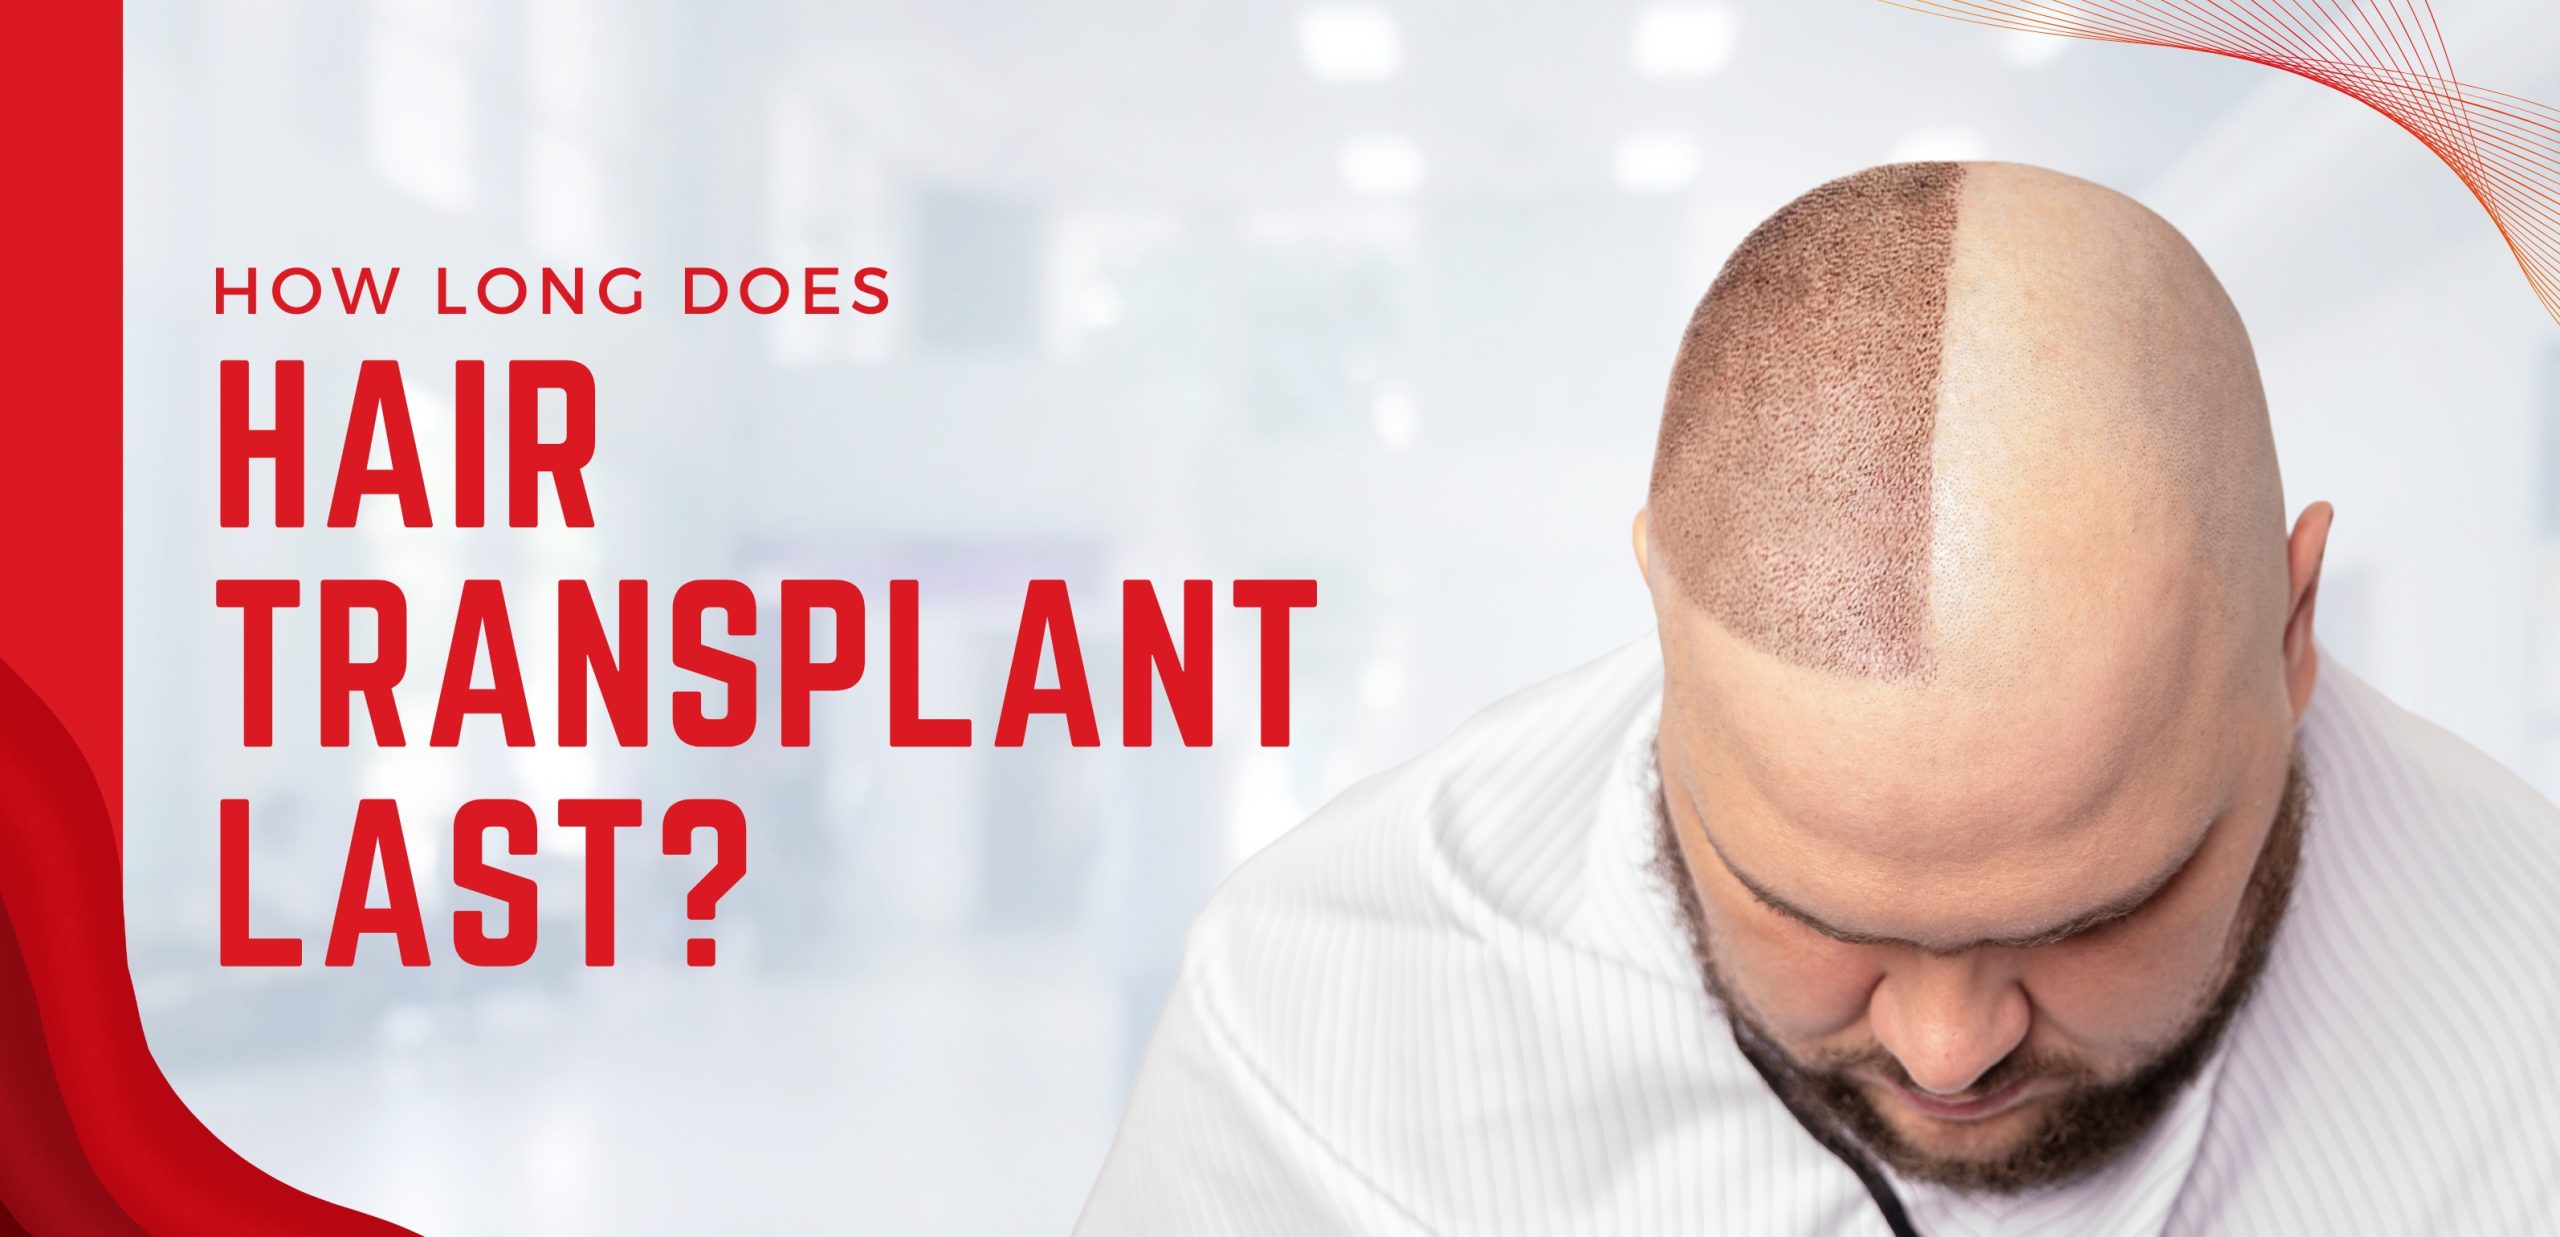 How Long Does Hair Transplant Last?